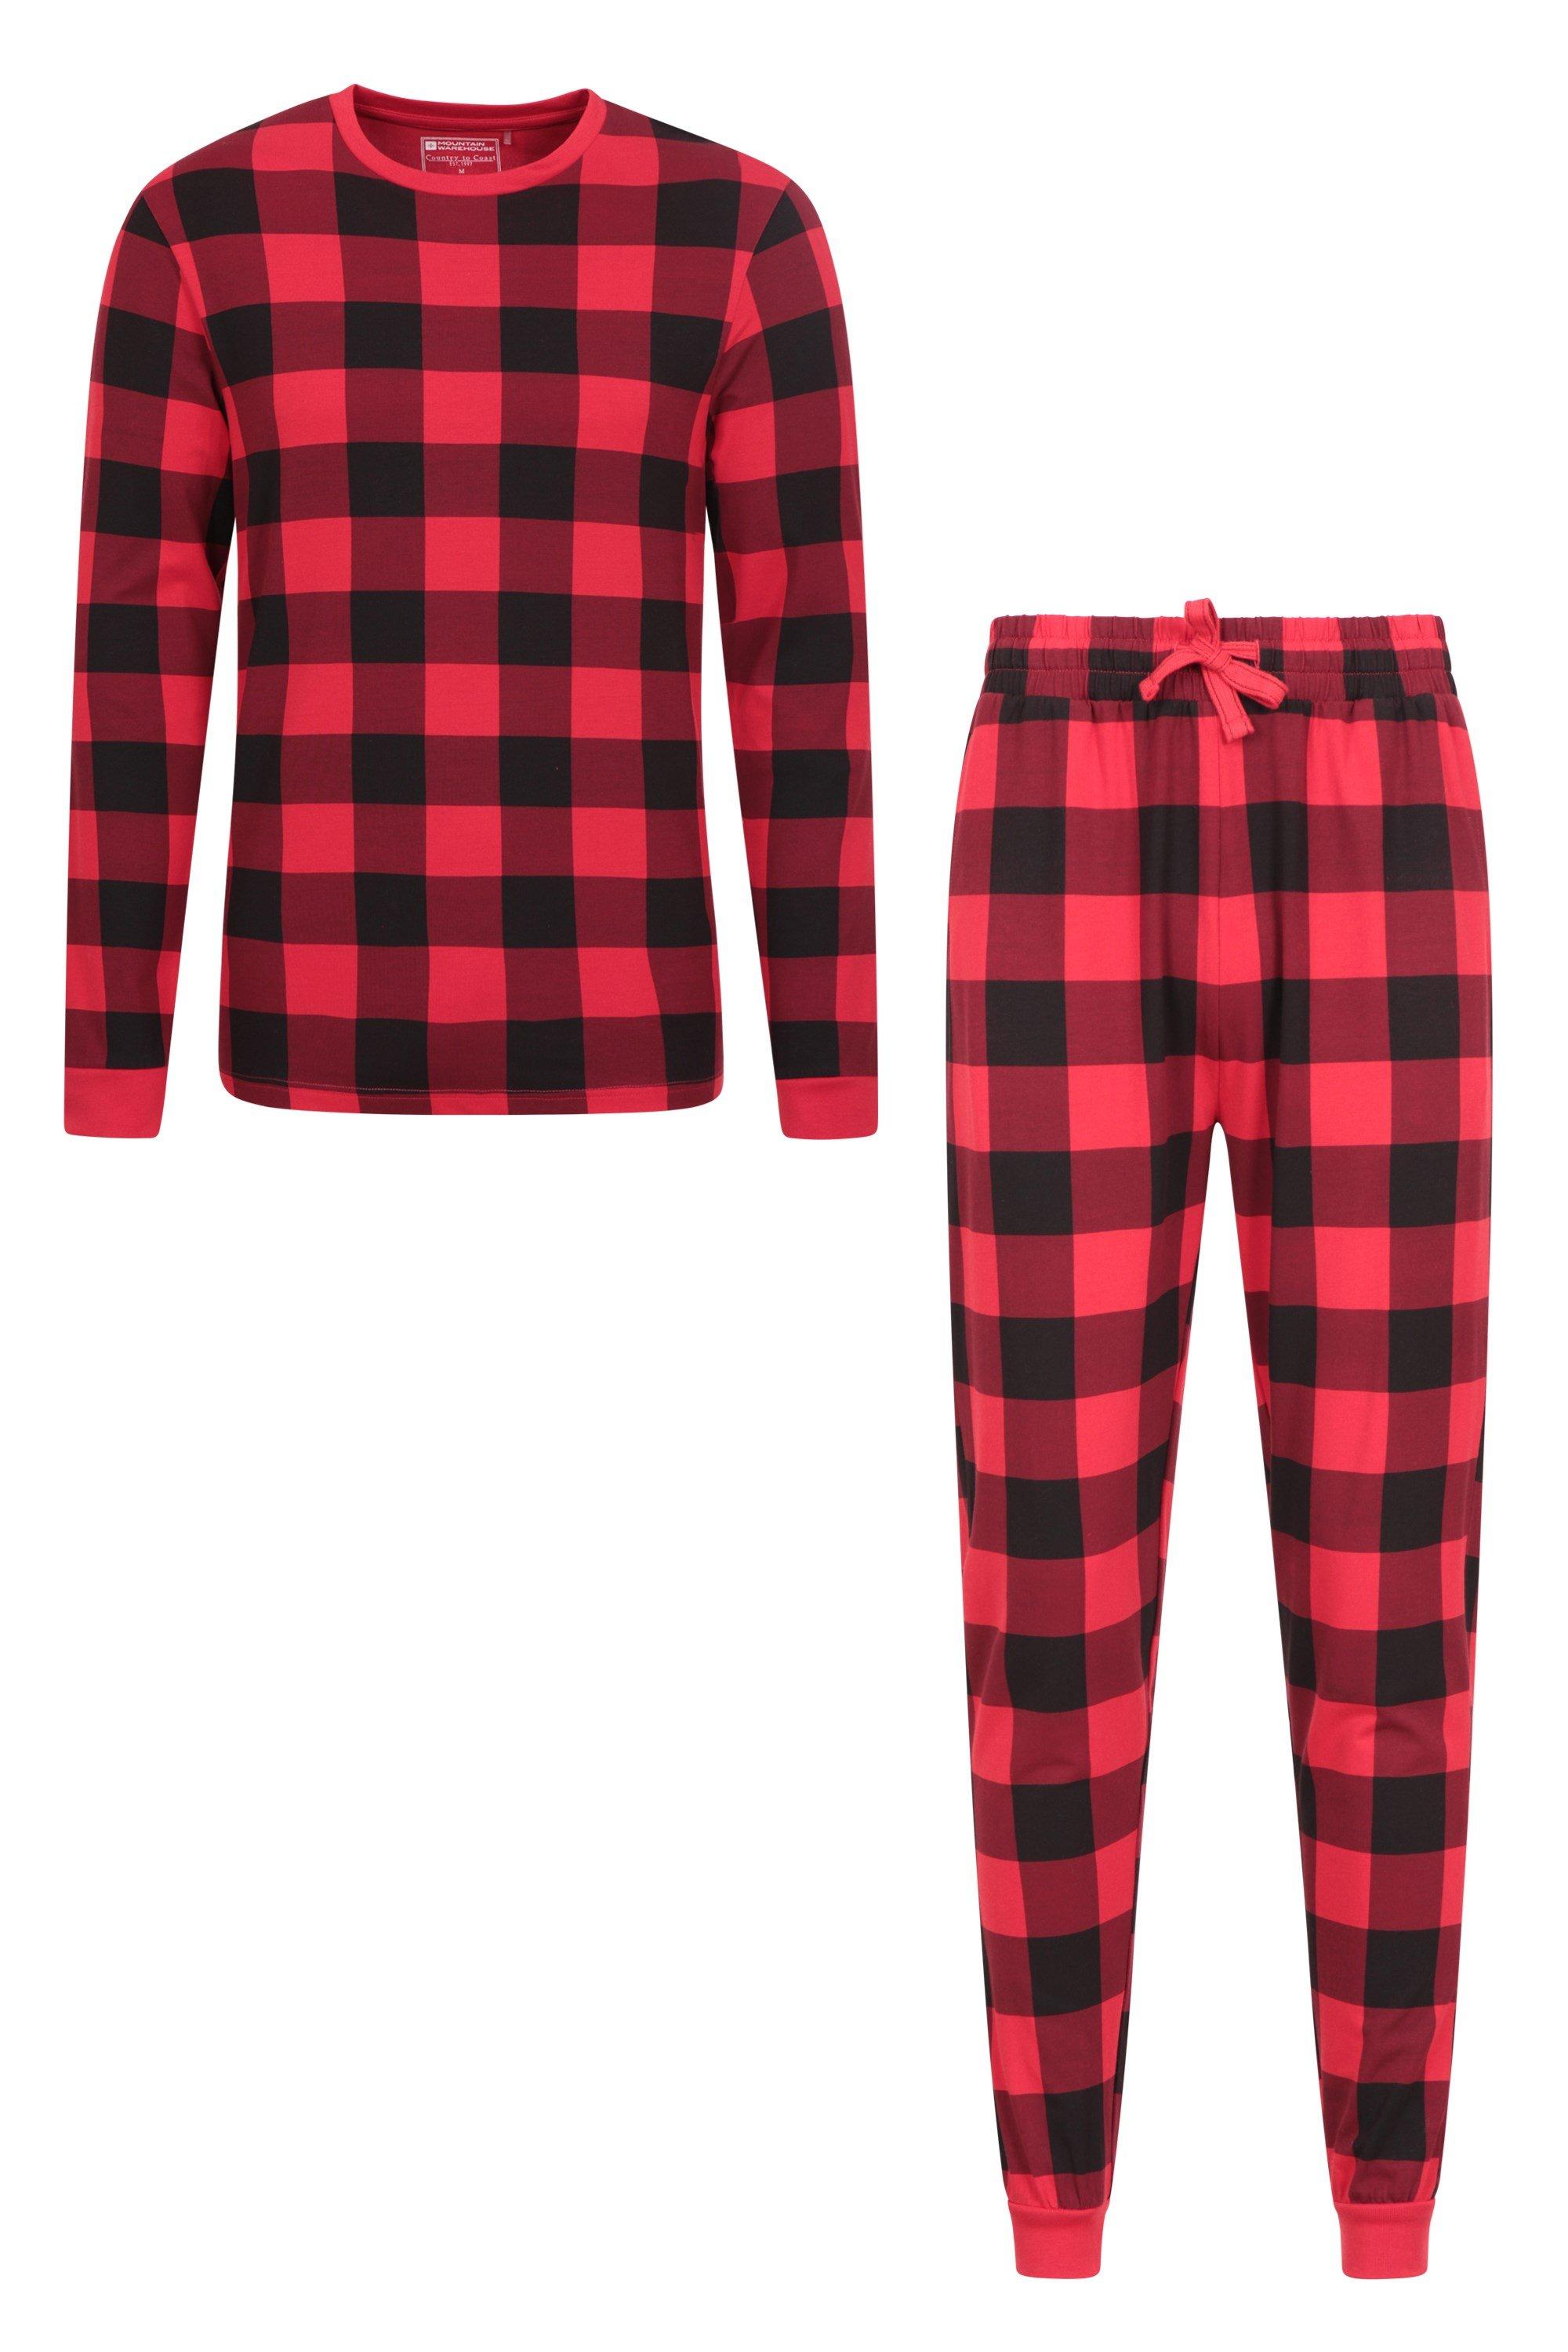 Printed Pyjama Set Elastic Cuffs Hem Winter Loungewear